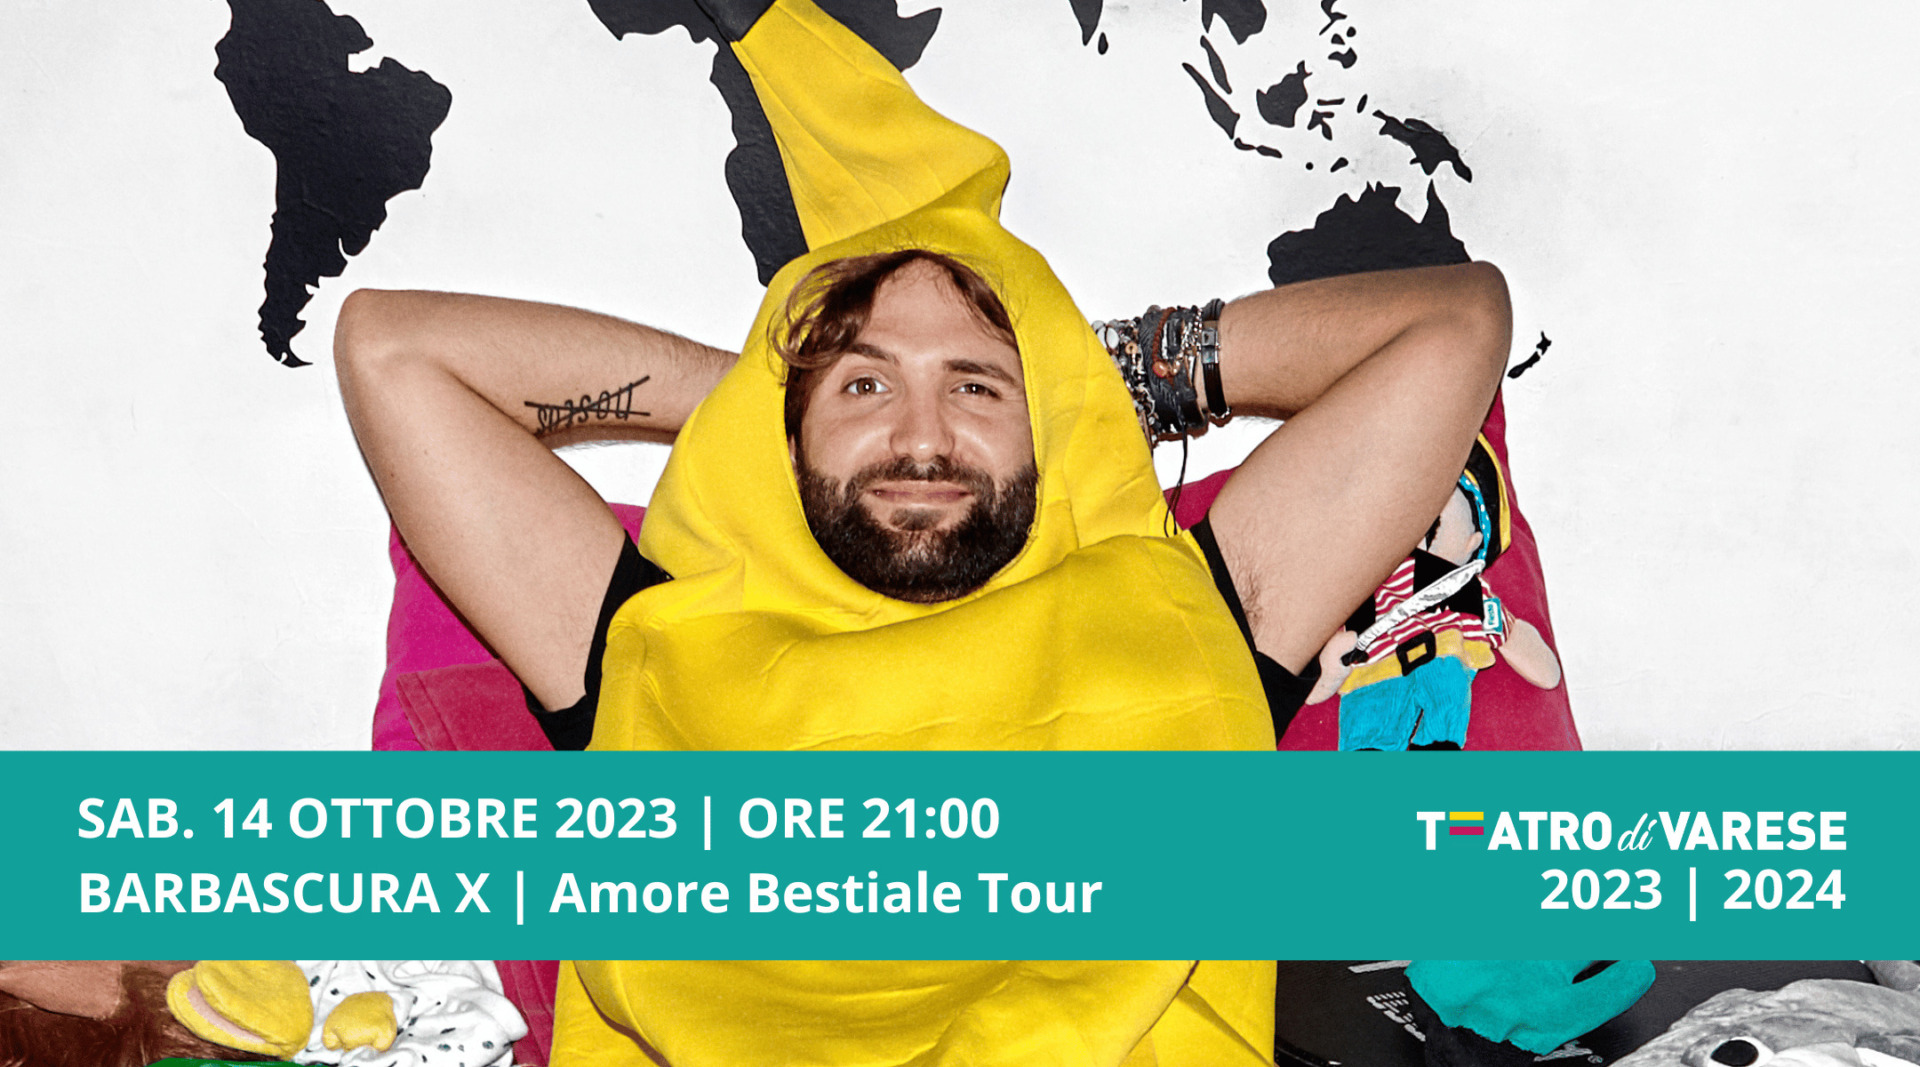 Barbascura X  Amore Bestiale Tour – Teatro di Varese